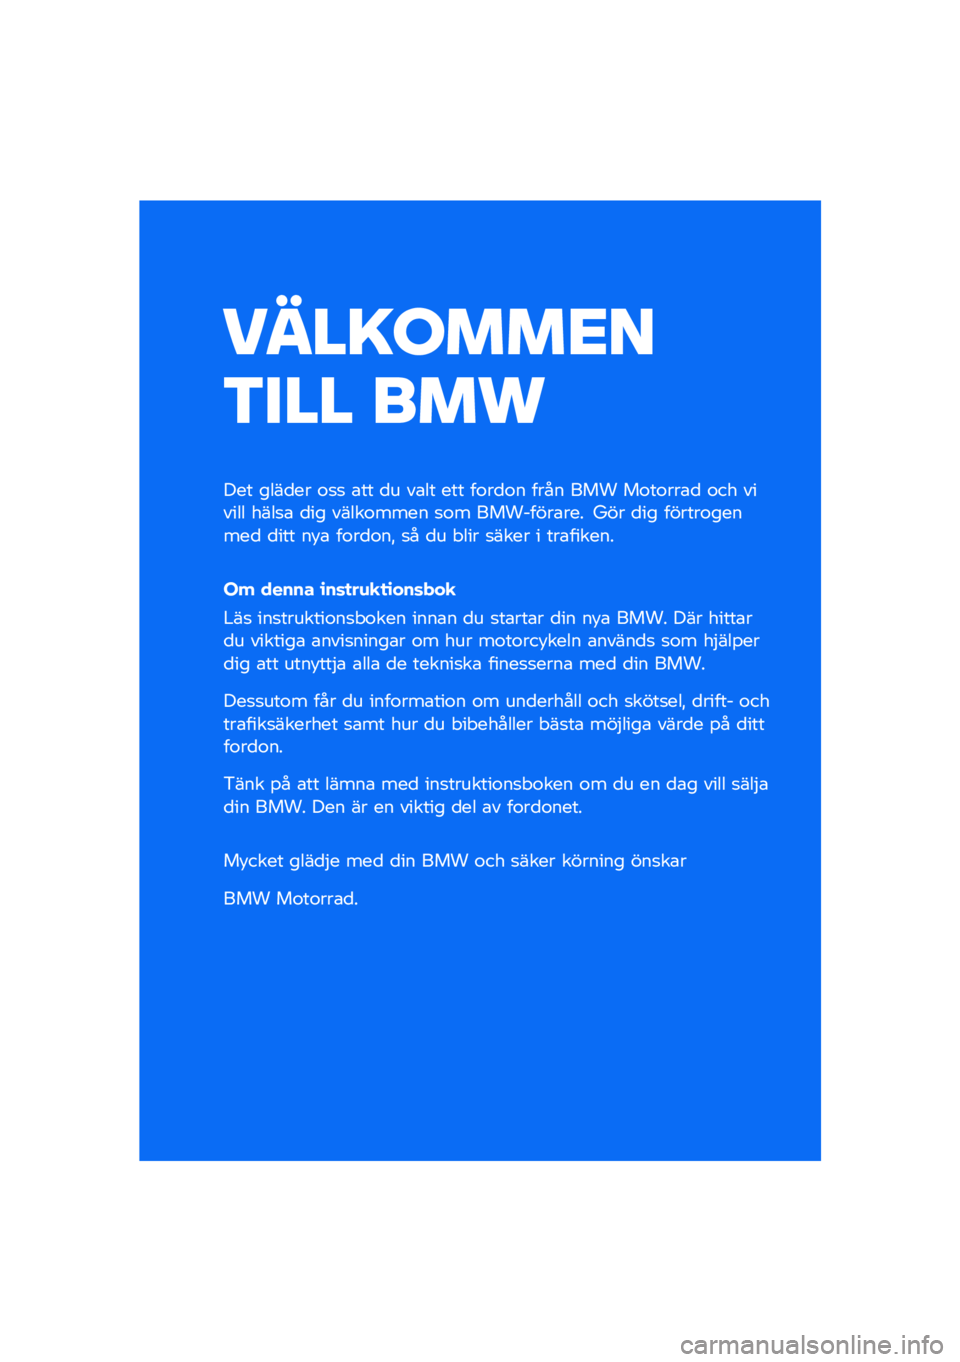 BMW MOTORRAD F 900 R 2020  Instruktionsbok (in Swedish) �����\b�	�	�
�
�\f�
�� ��	�
��� ����
�� �\f�
�
 �\b�� �
� ��\b�� ��� ��\f��
�\f� ���� ��� ��\f��\f���\b�
 �\f�� ������ ����
�\b �
�� �����\f��